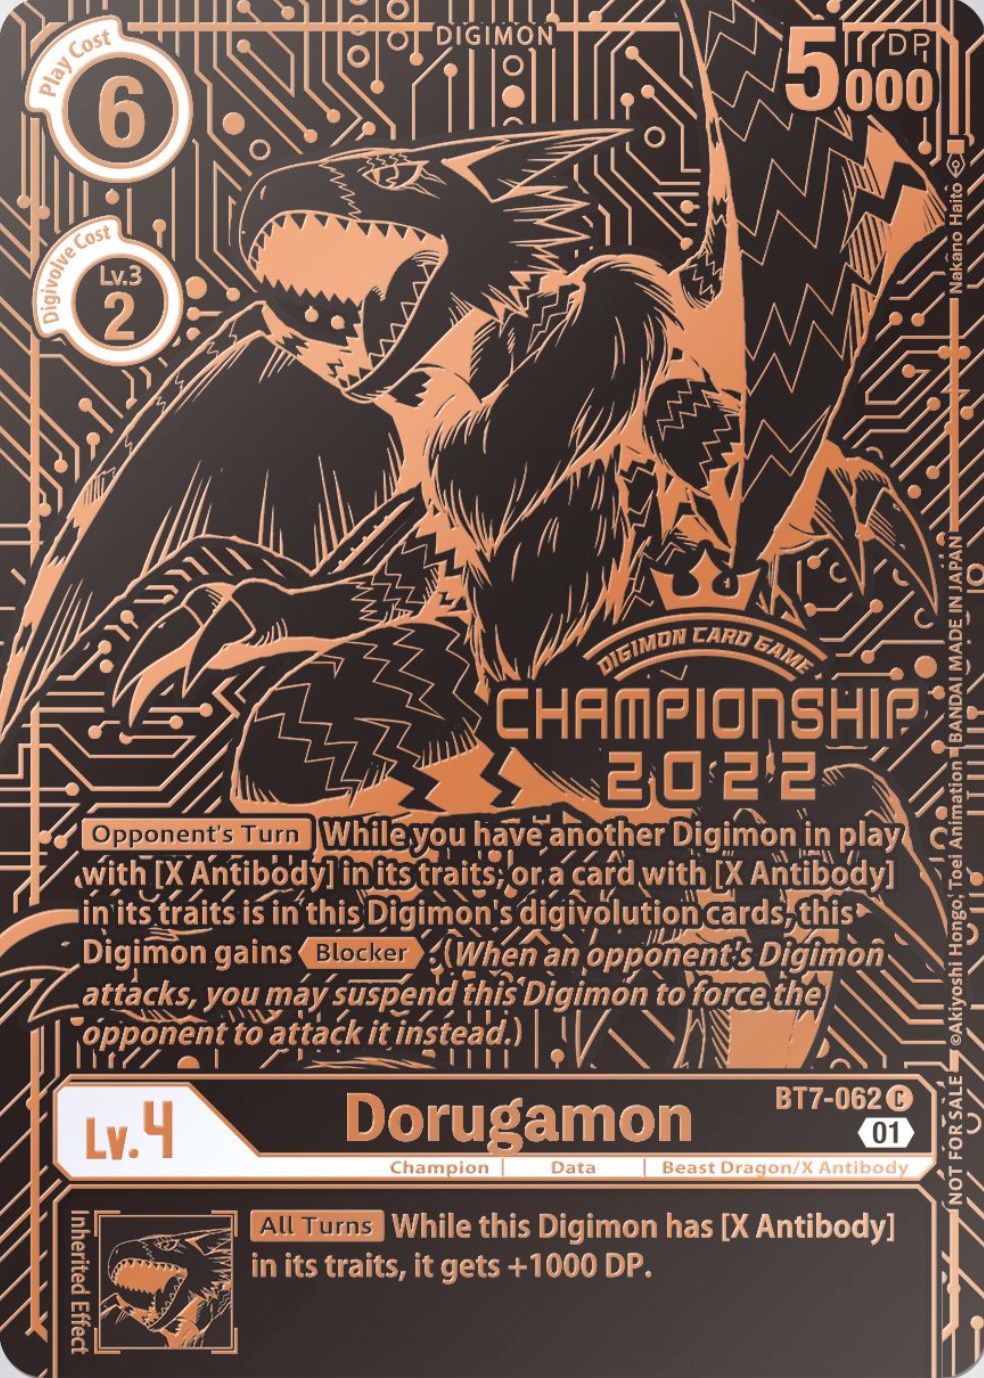 Dorugamon [BT7-062] (2022 Championship Finals 3rd Place) [Next Adventure Promos] | Black Swamp Games